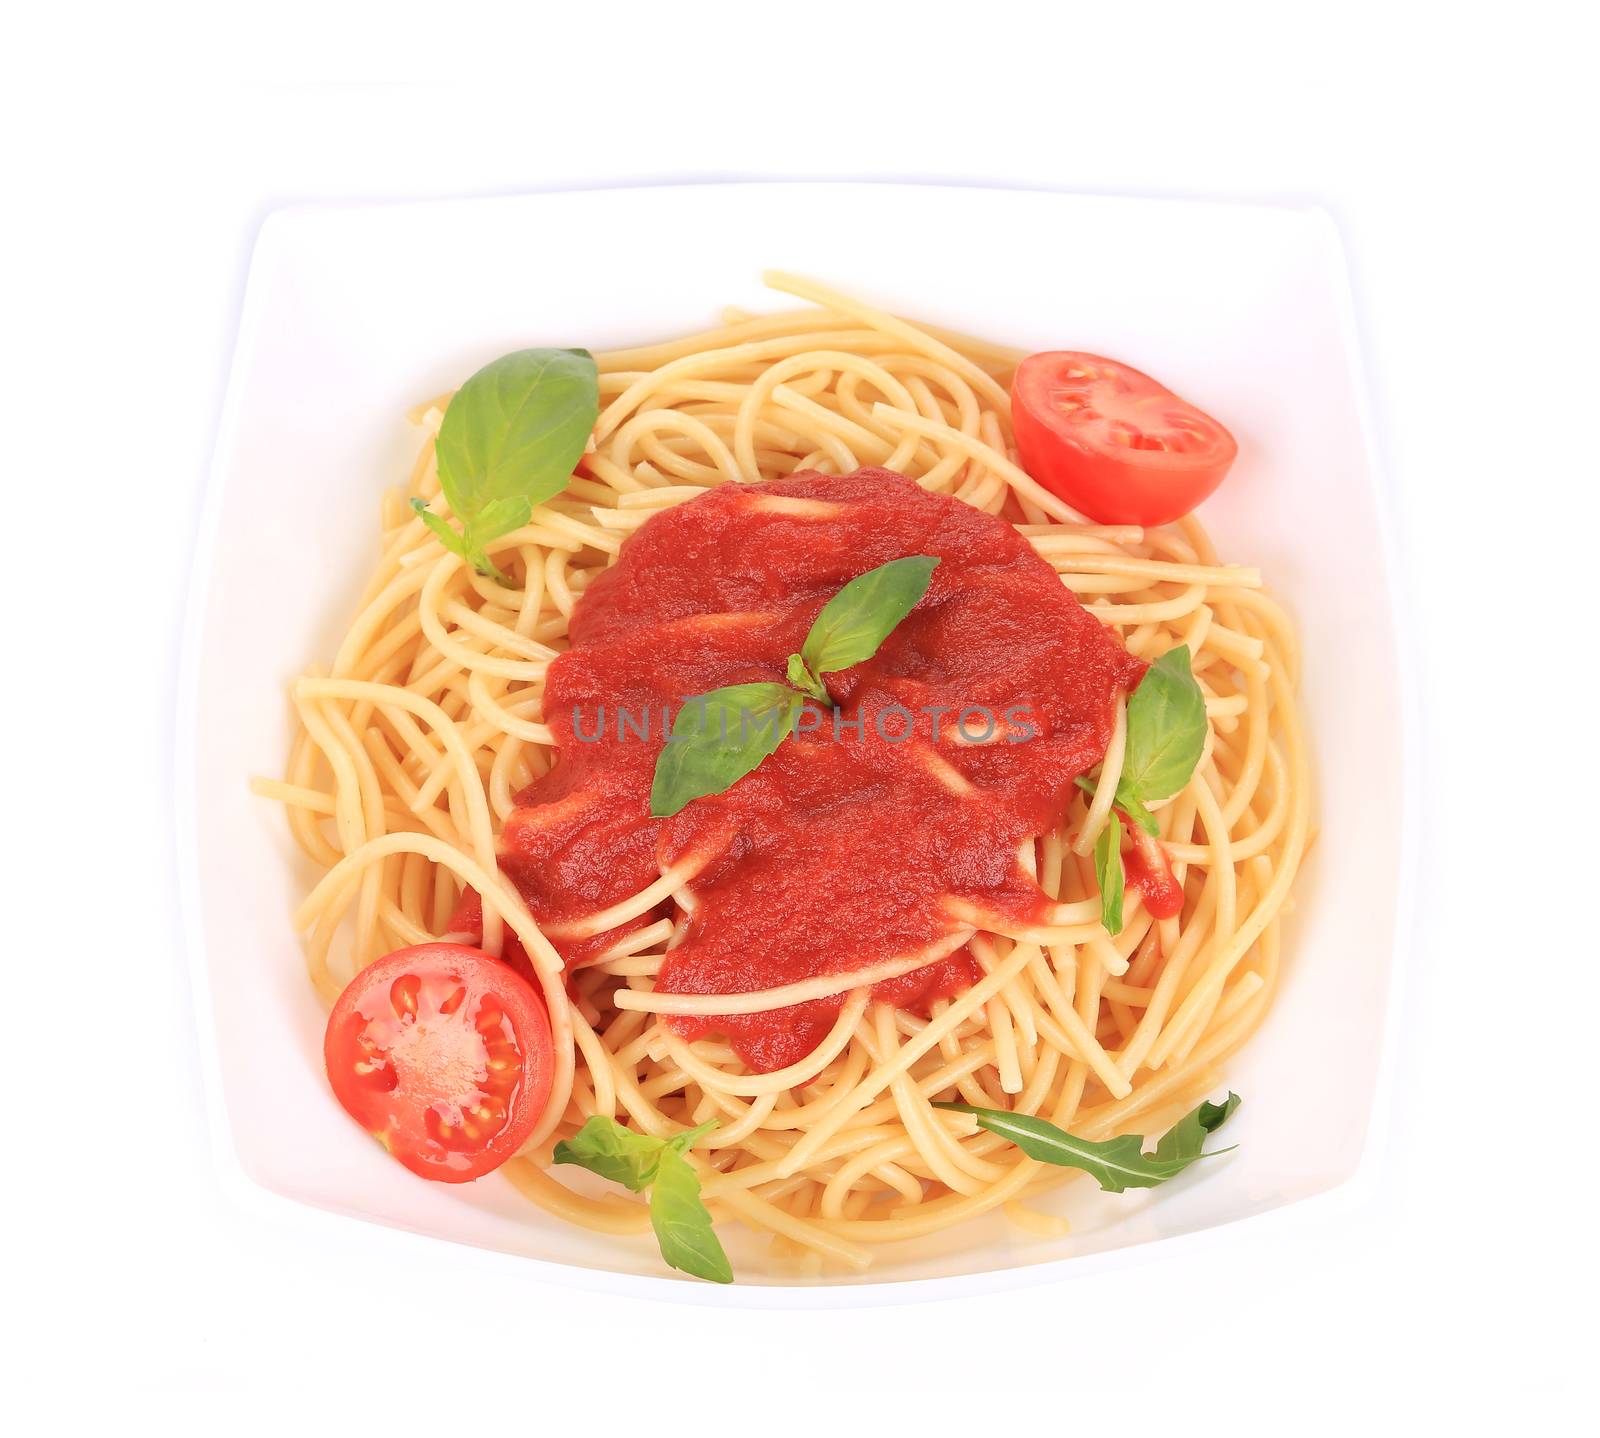 Tasty italian pasta with tomato sauce. by indigolotos